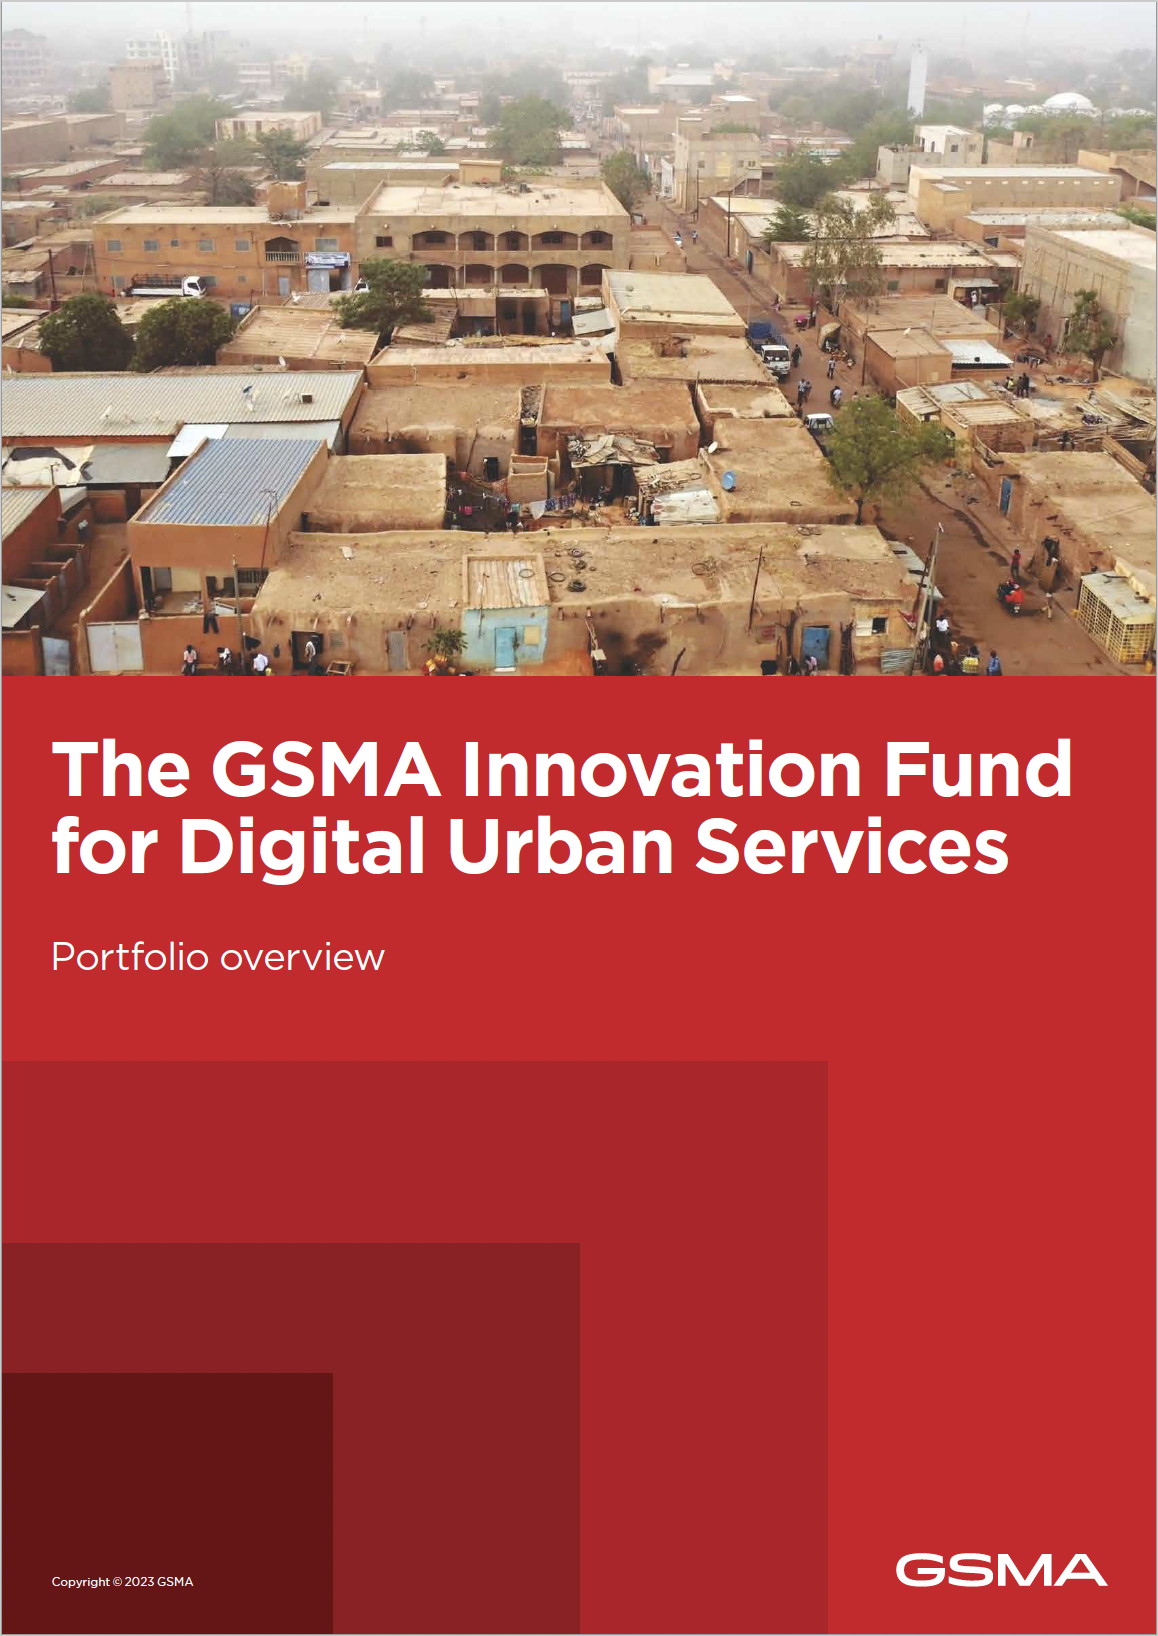 The GSMA Innovation Fund for Digital Urban Services: Portfolio overview image